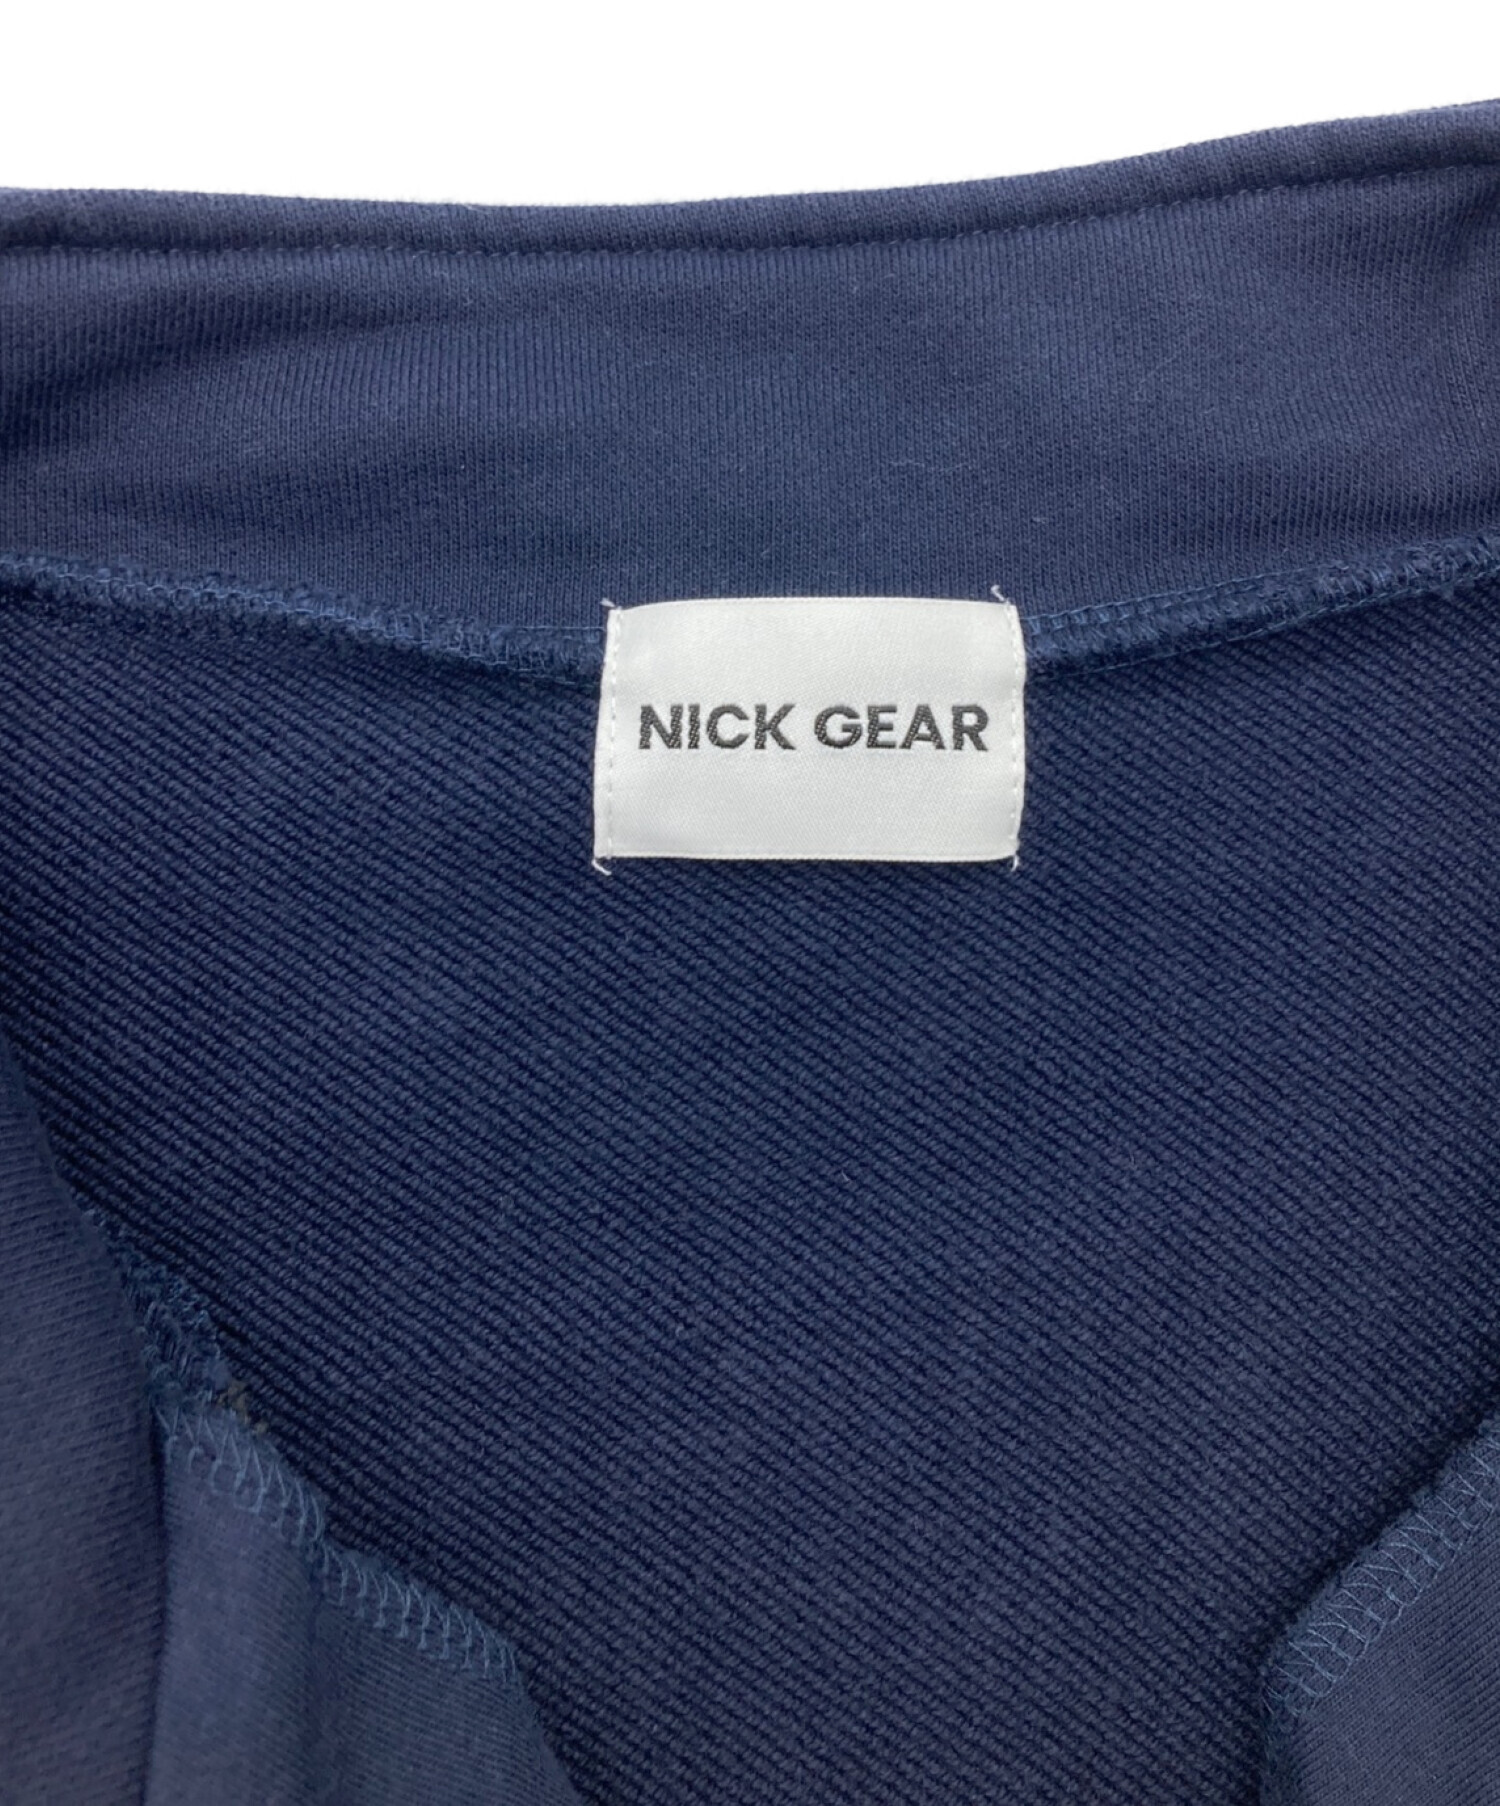 nick gear (ニックギア) Firsthand (ファーストハンド) SP FLOWER HALFZIP SWEAT ネイビー サイズ:XL